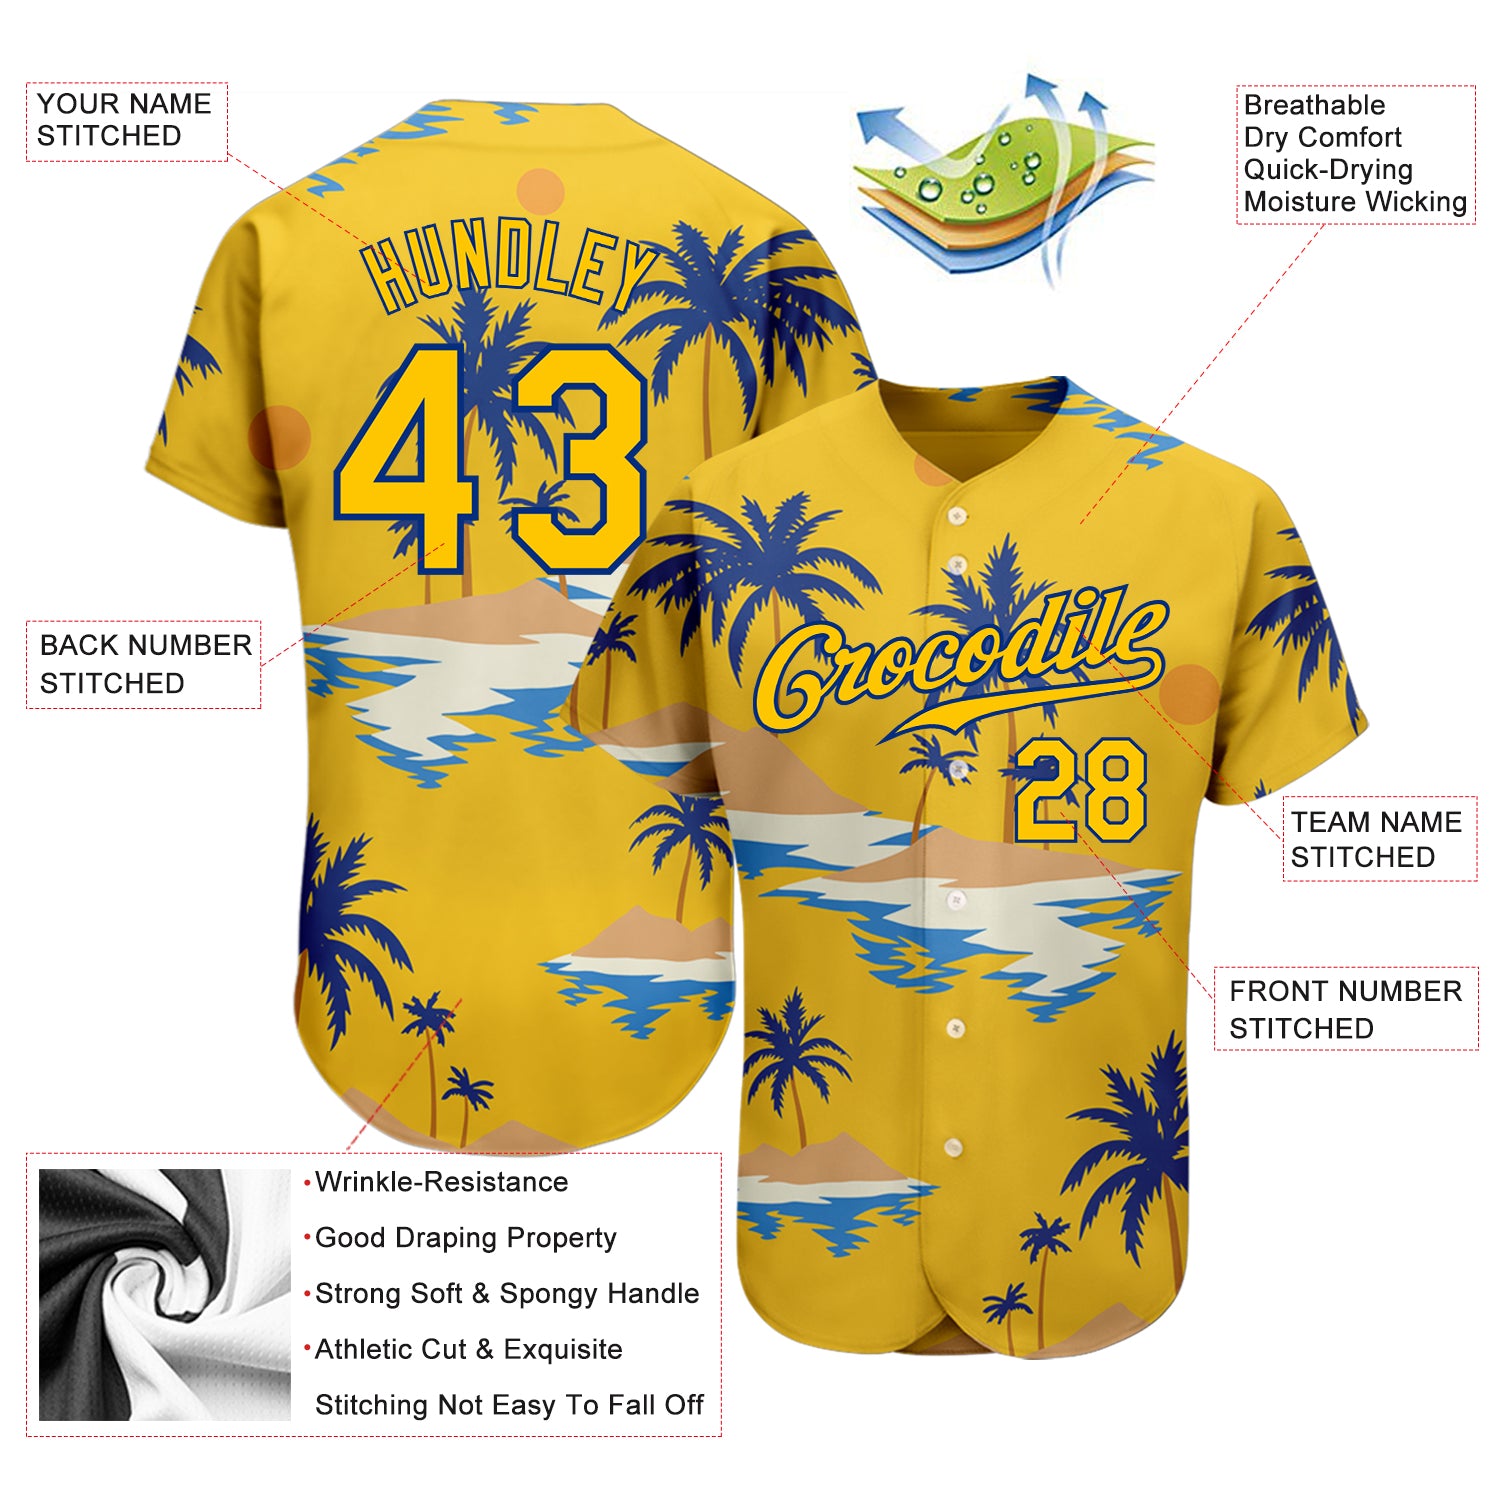 Oakland Athletics Yellow MLB Jerseys for sale